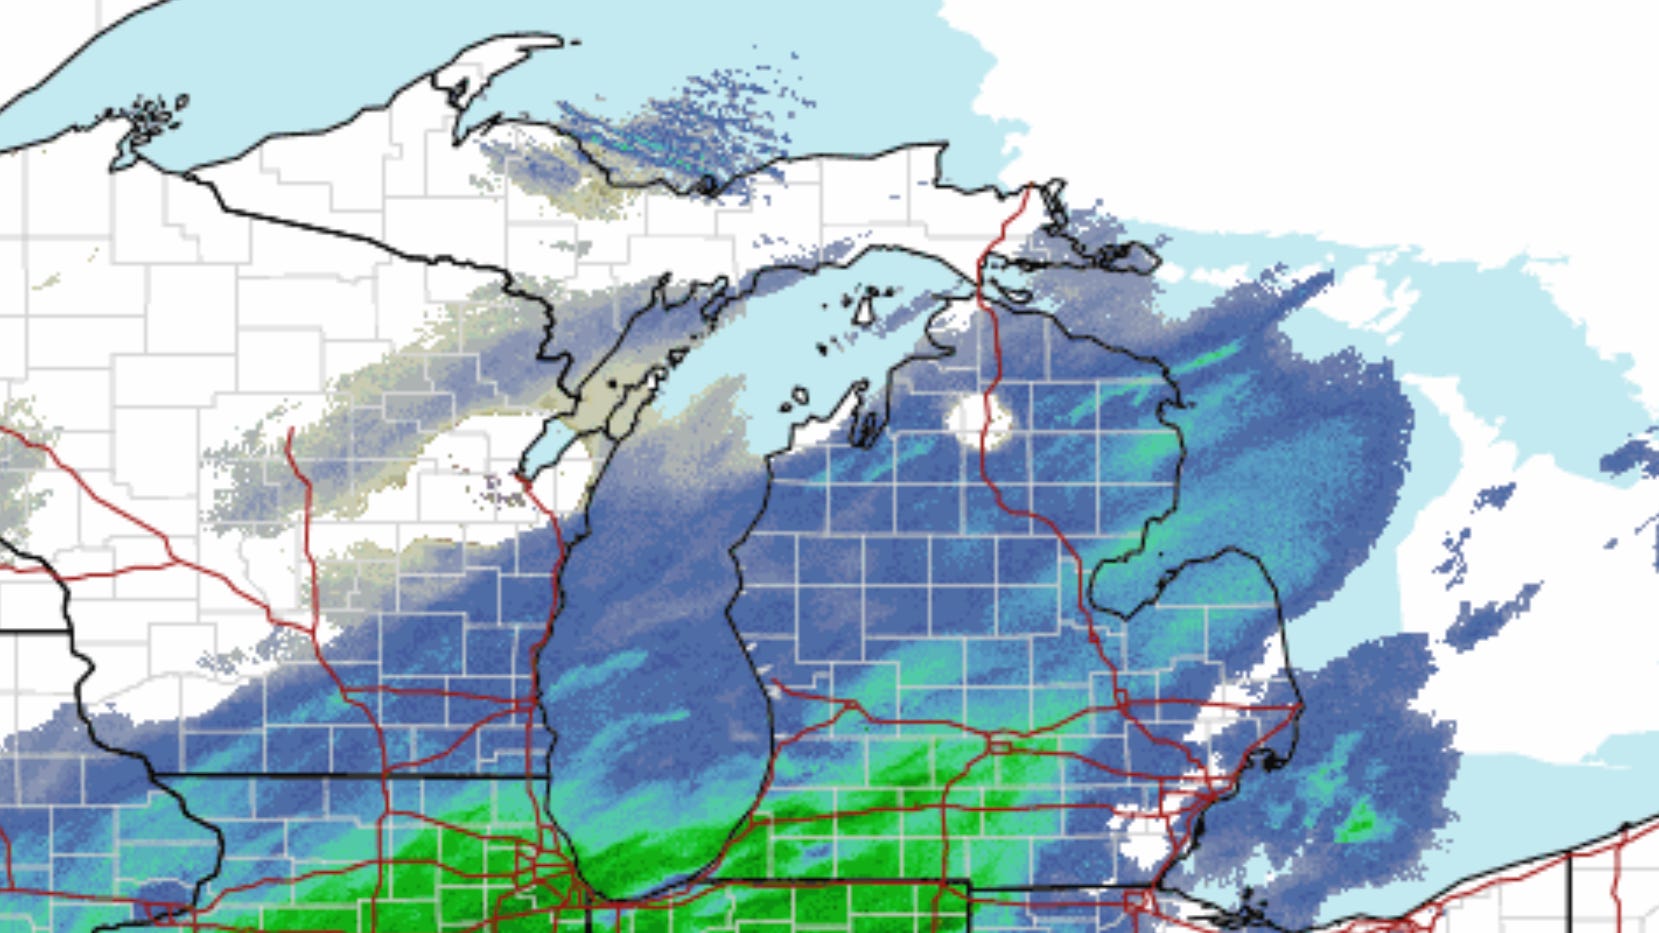 Michigan live weather radar, traffic updates for winter storm